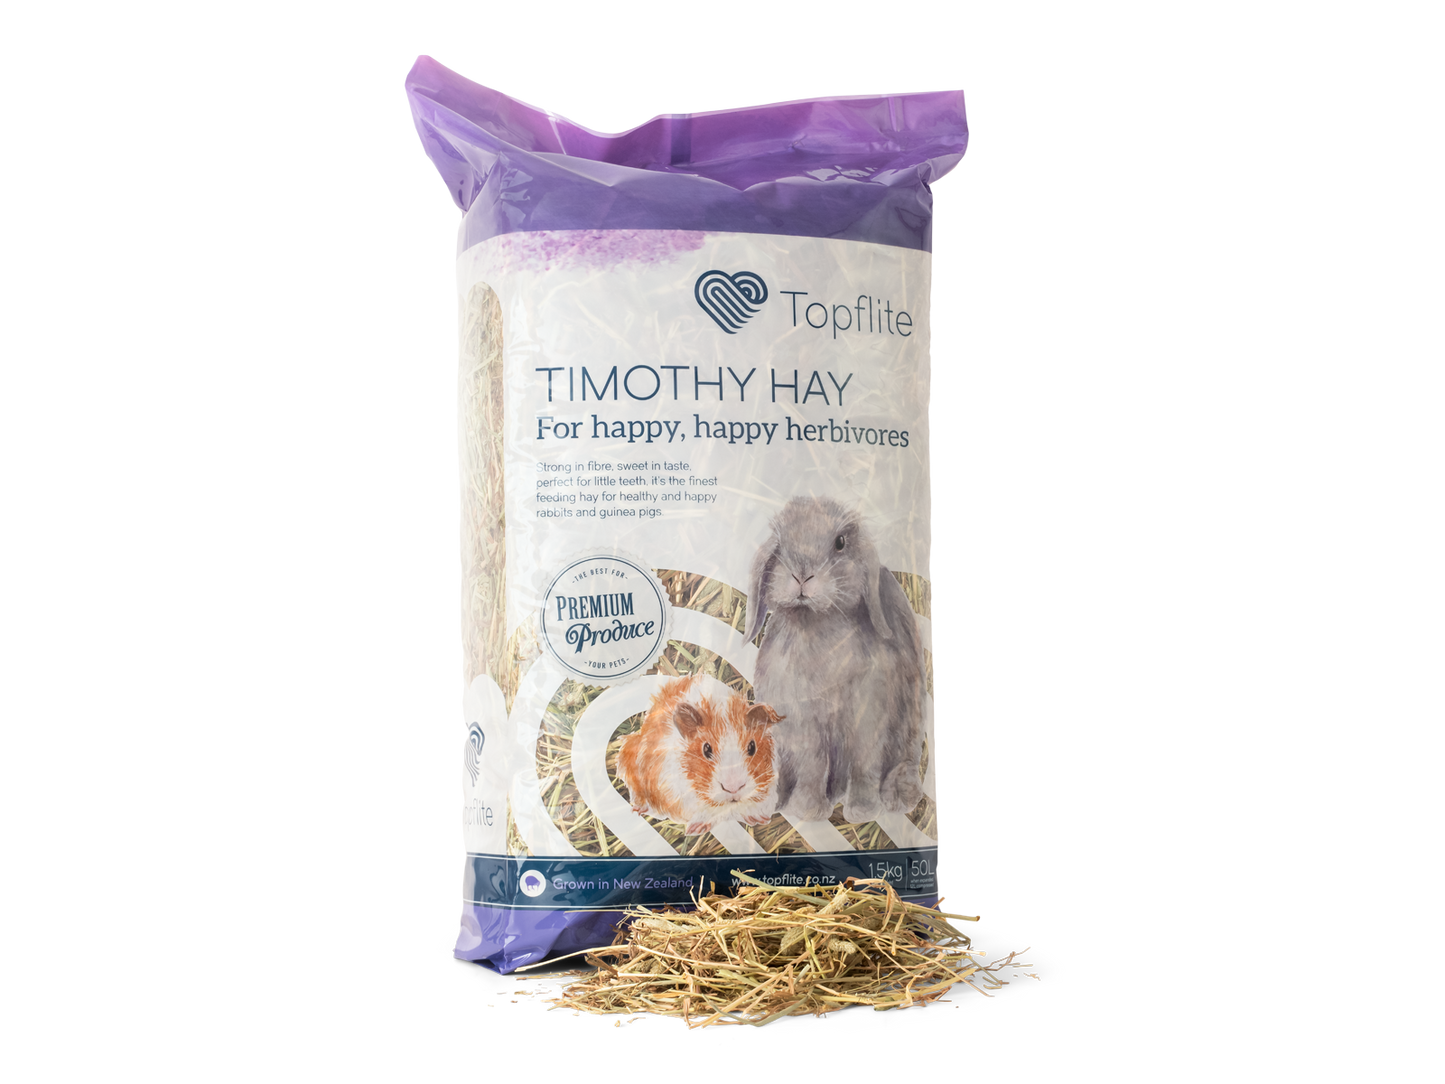 Topflite Timothy Hay 1.5kg Bag